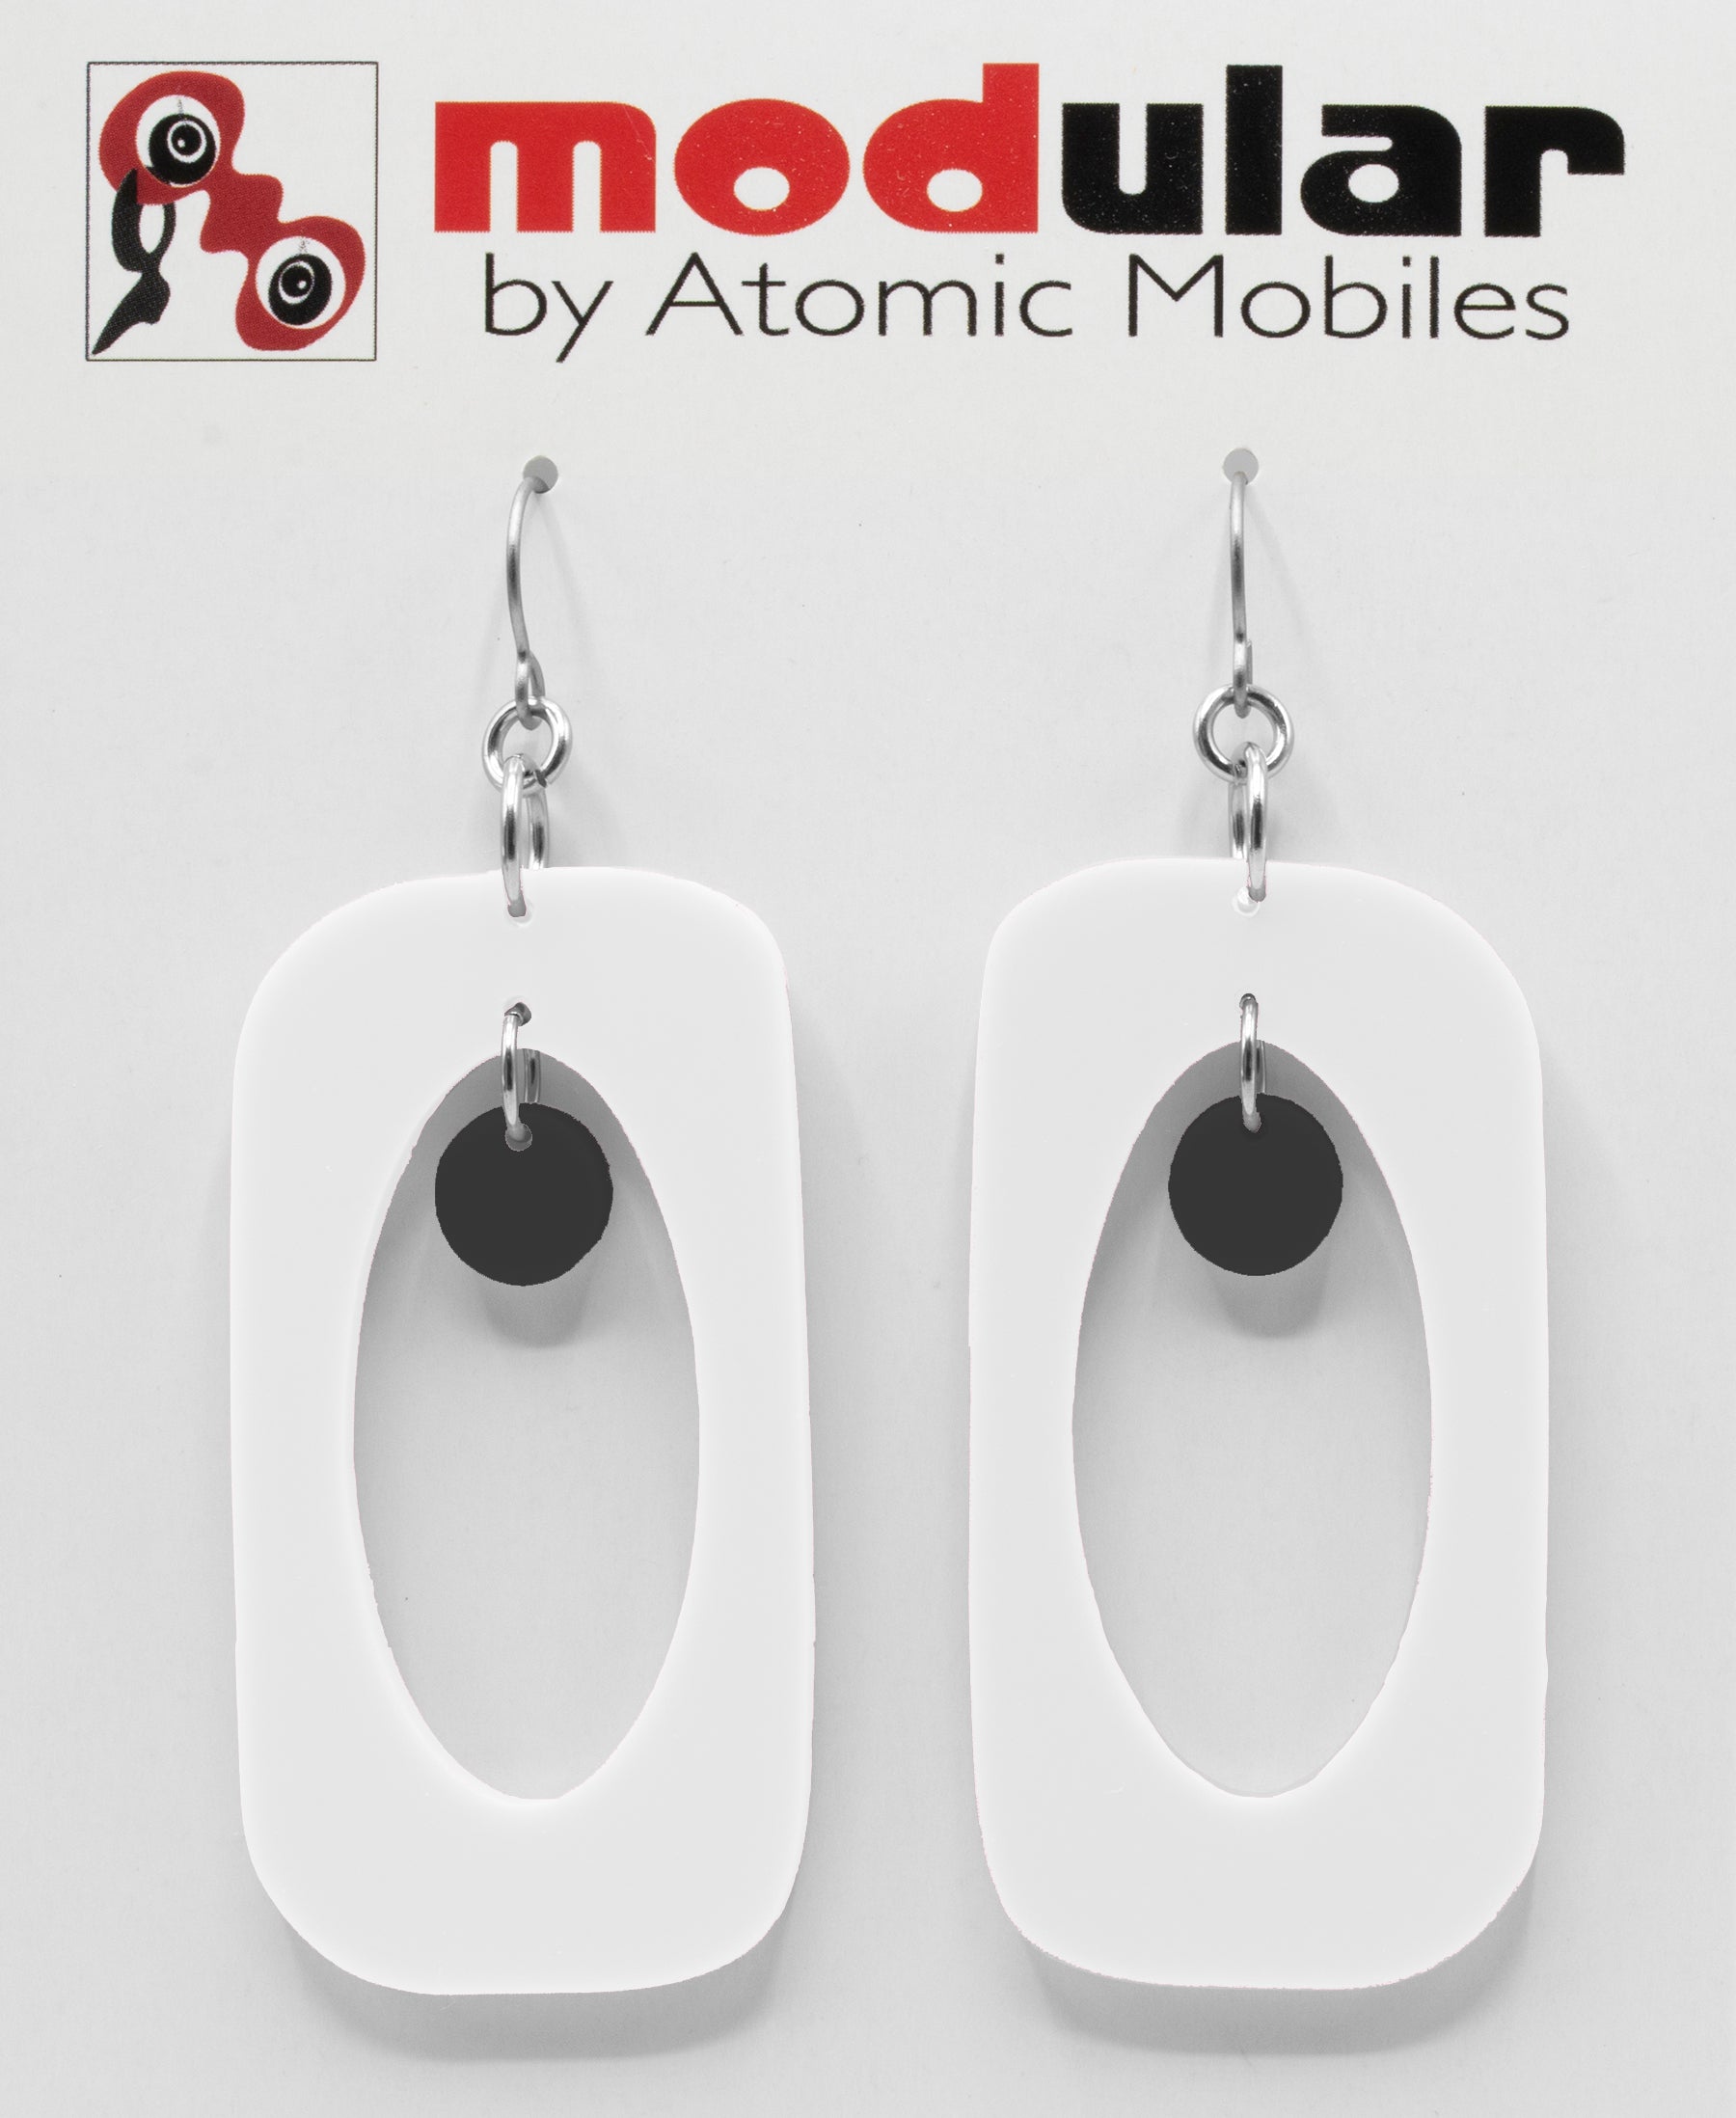 MODular Earrings - Beatnik Boho Statement Earrings in White and Black by AtomicMobiles.com - retro era inspired mod handmade jewelry